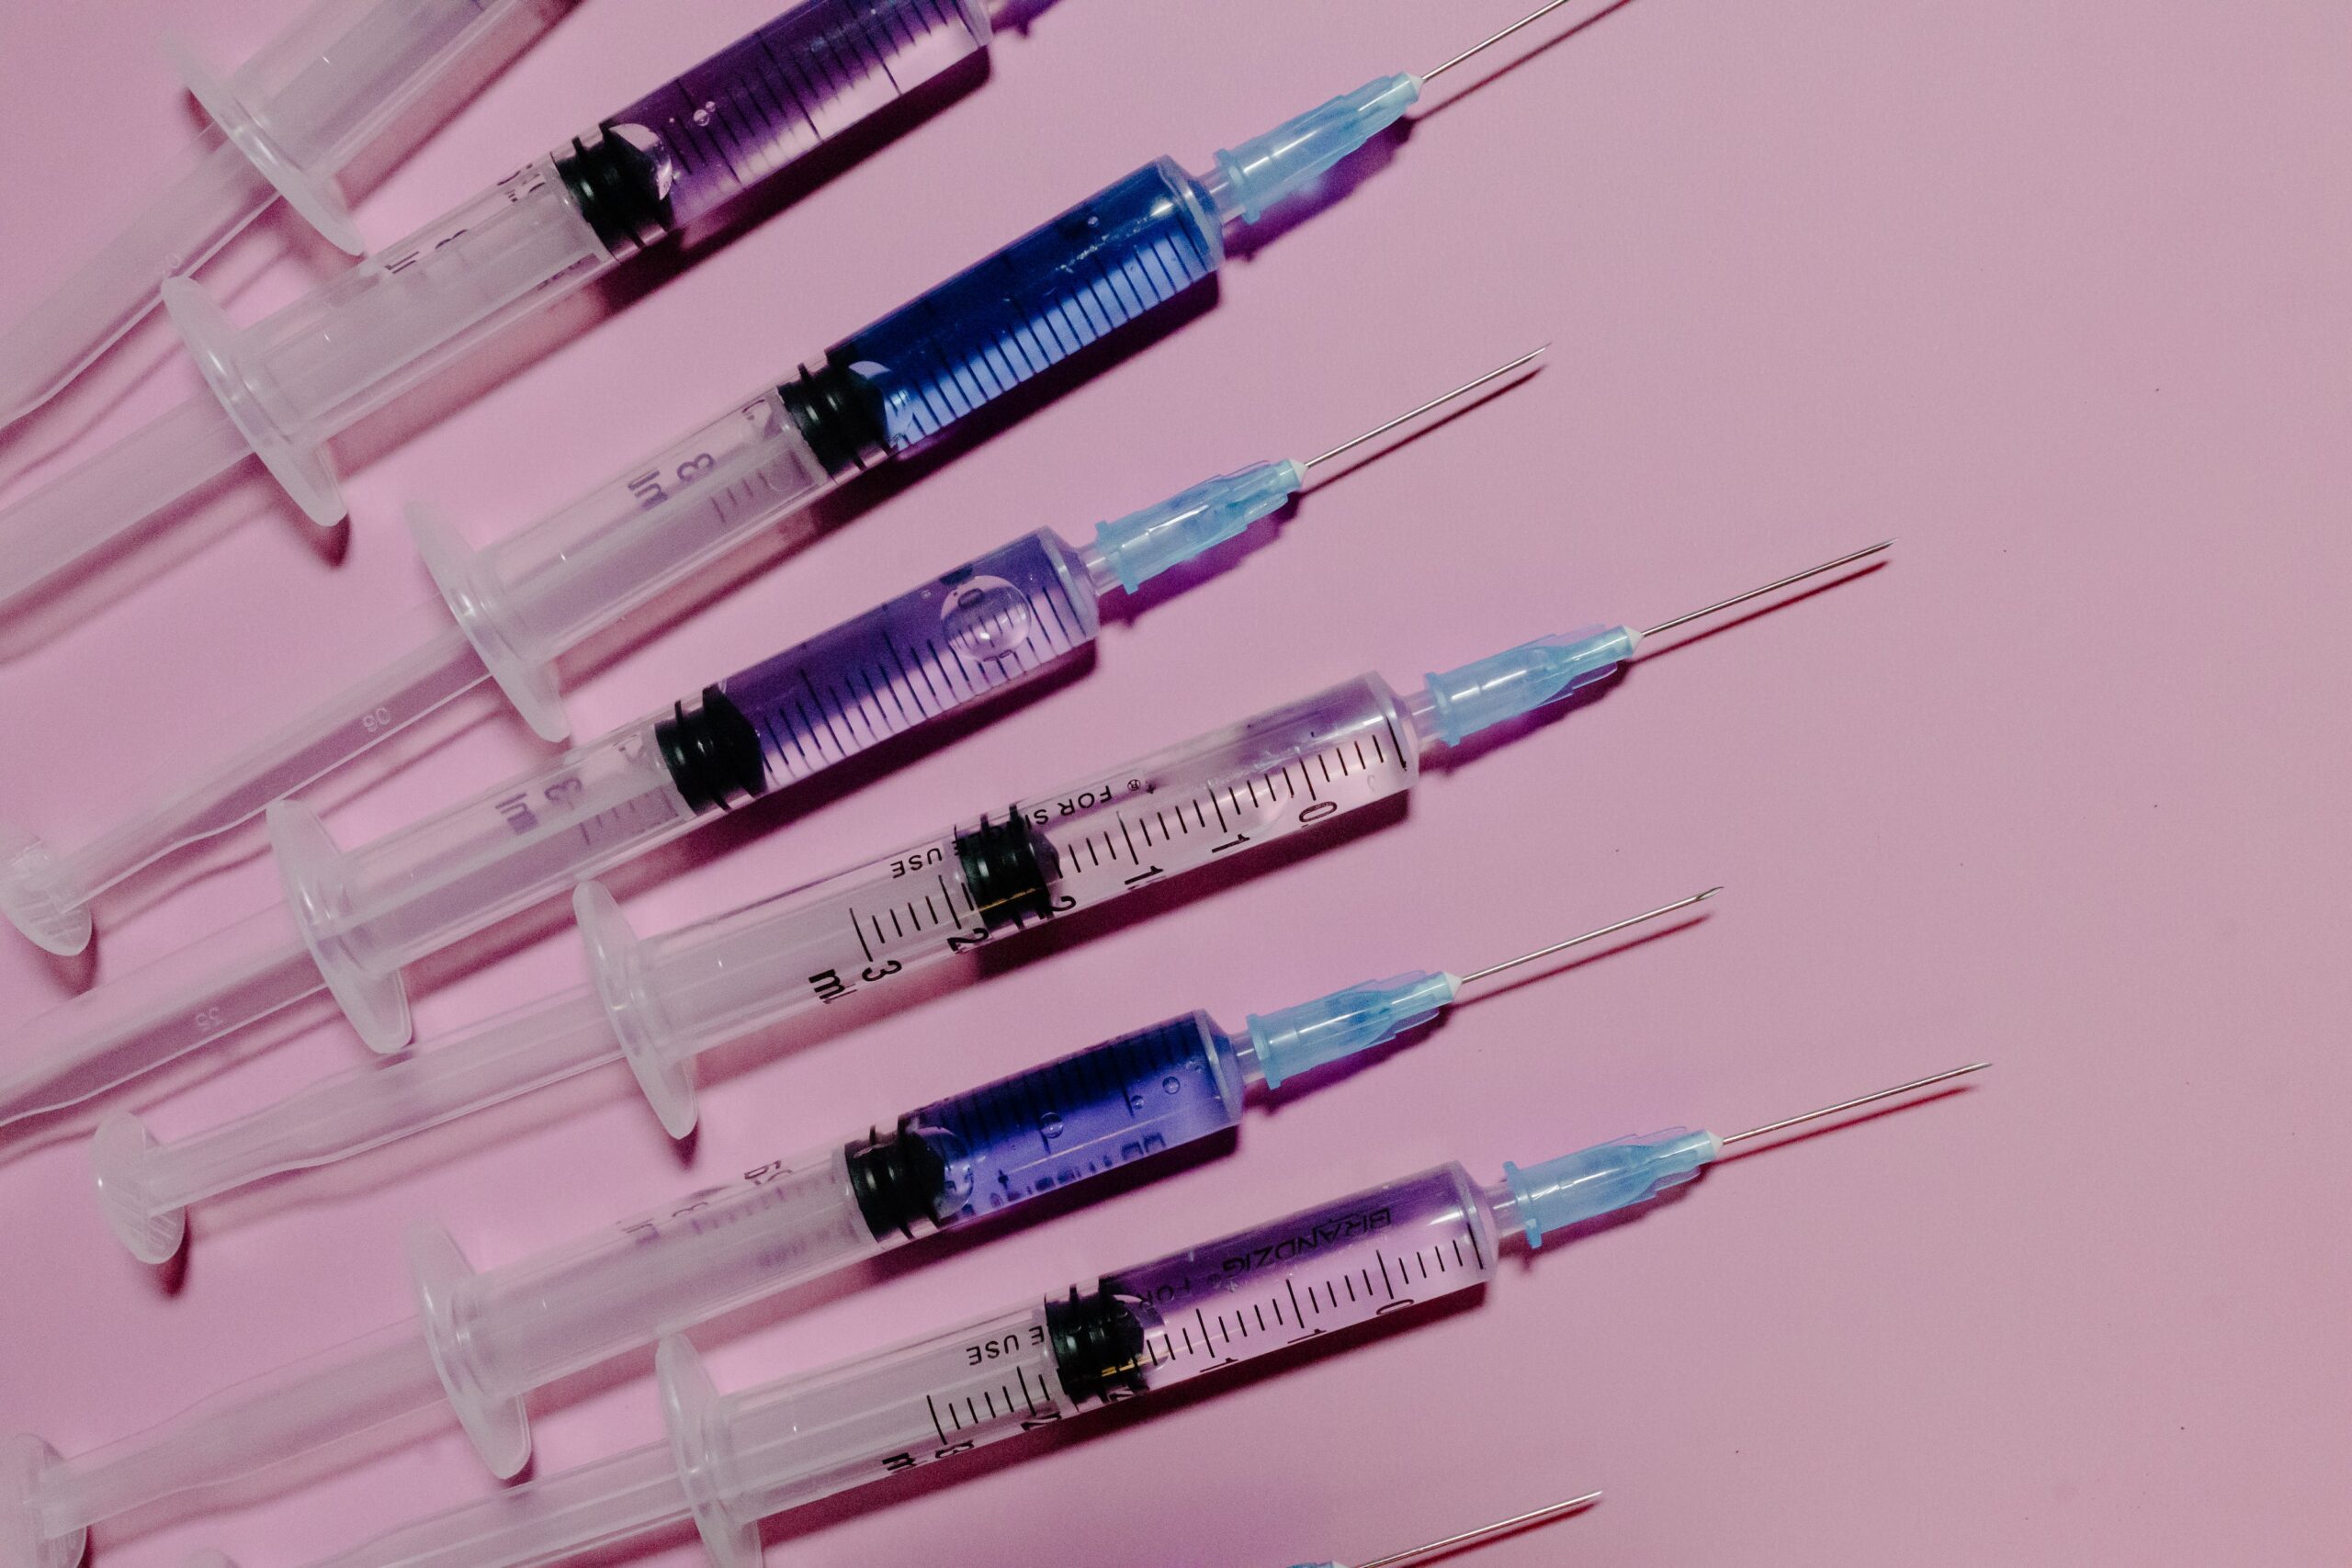 Brii Biosciences and VBI Vaccines agreements